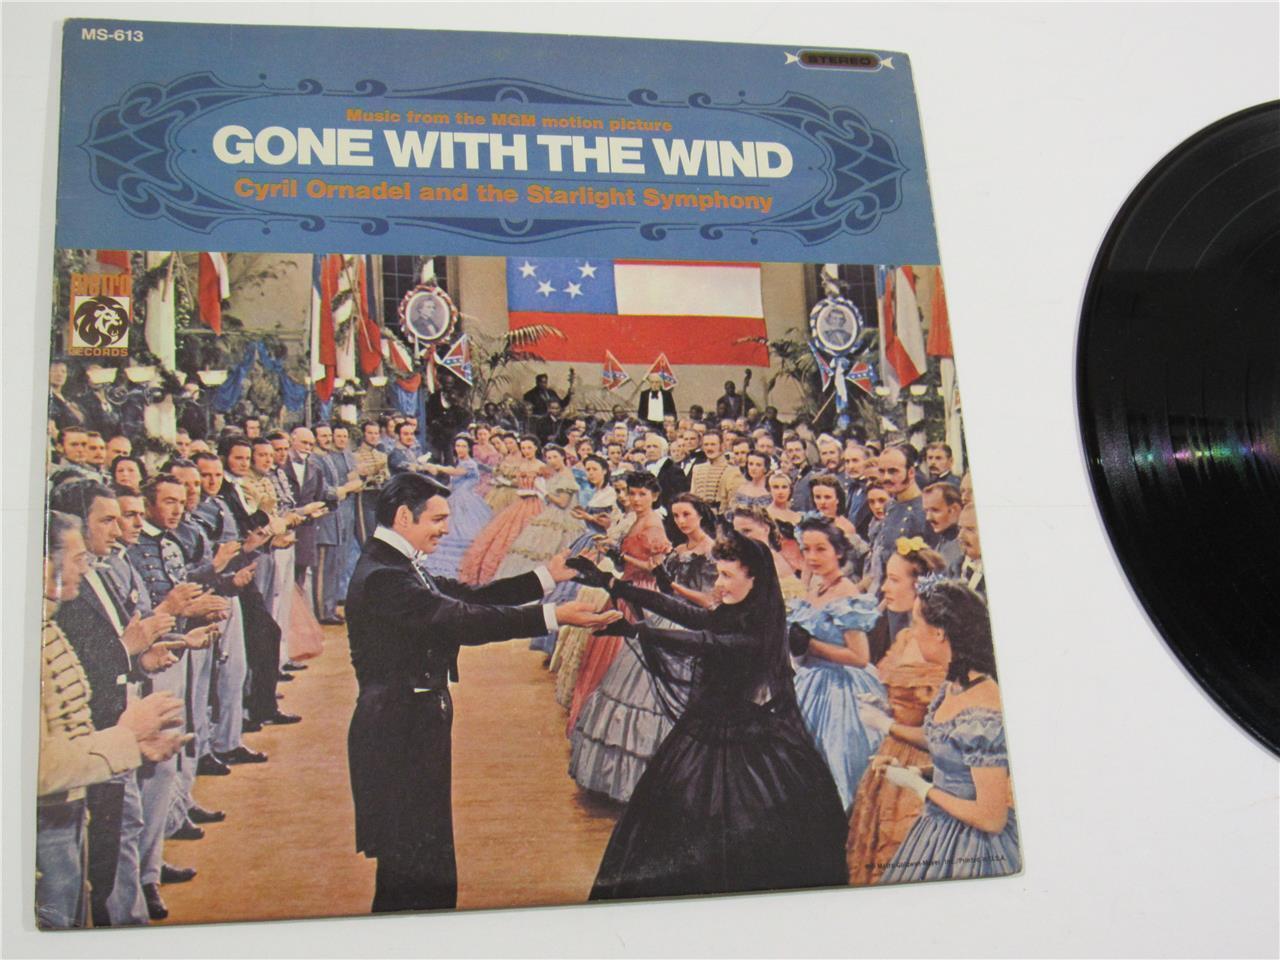 MUSIC RECORD ALBUM ~ GONE WITH WIND CIVIL WAR MOVIE SOUNDTRACK ~VINTAGE VINYL LP